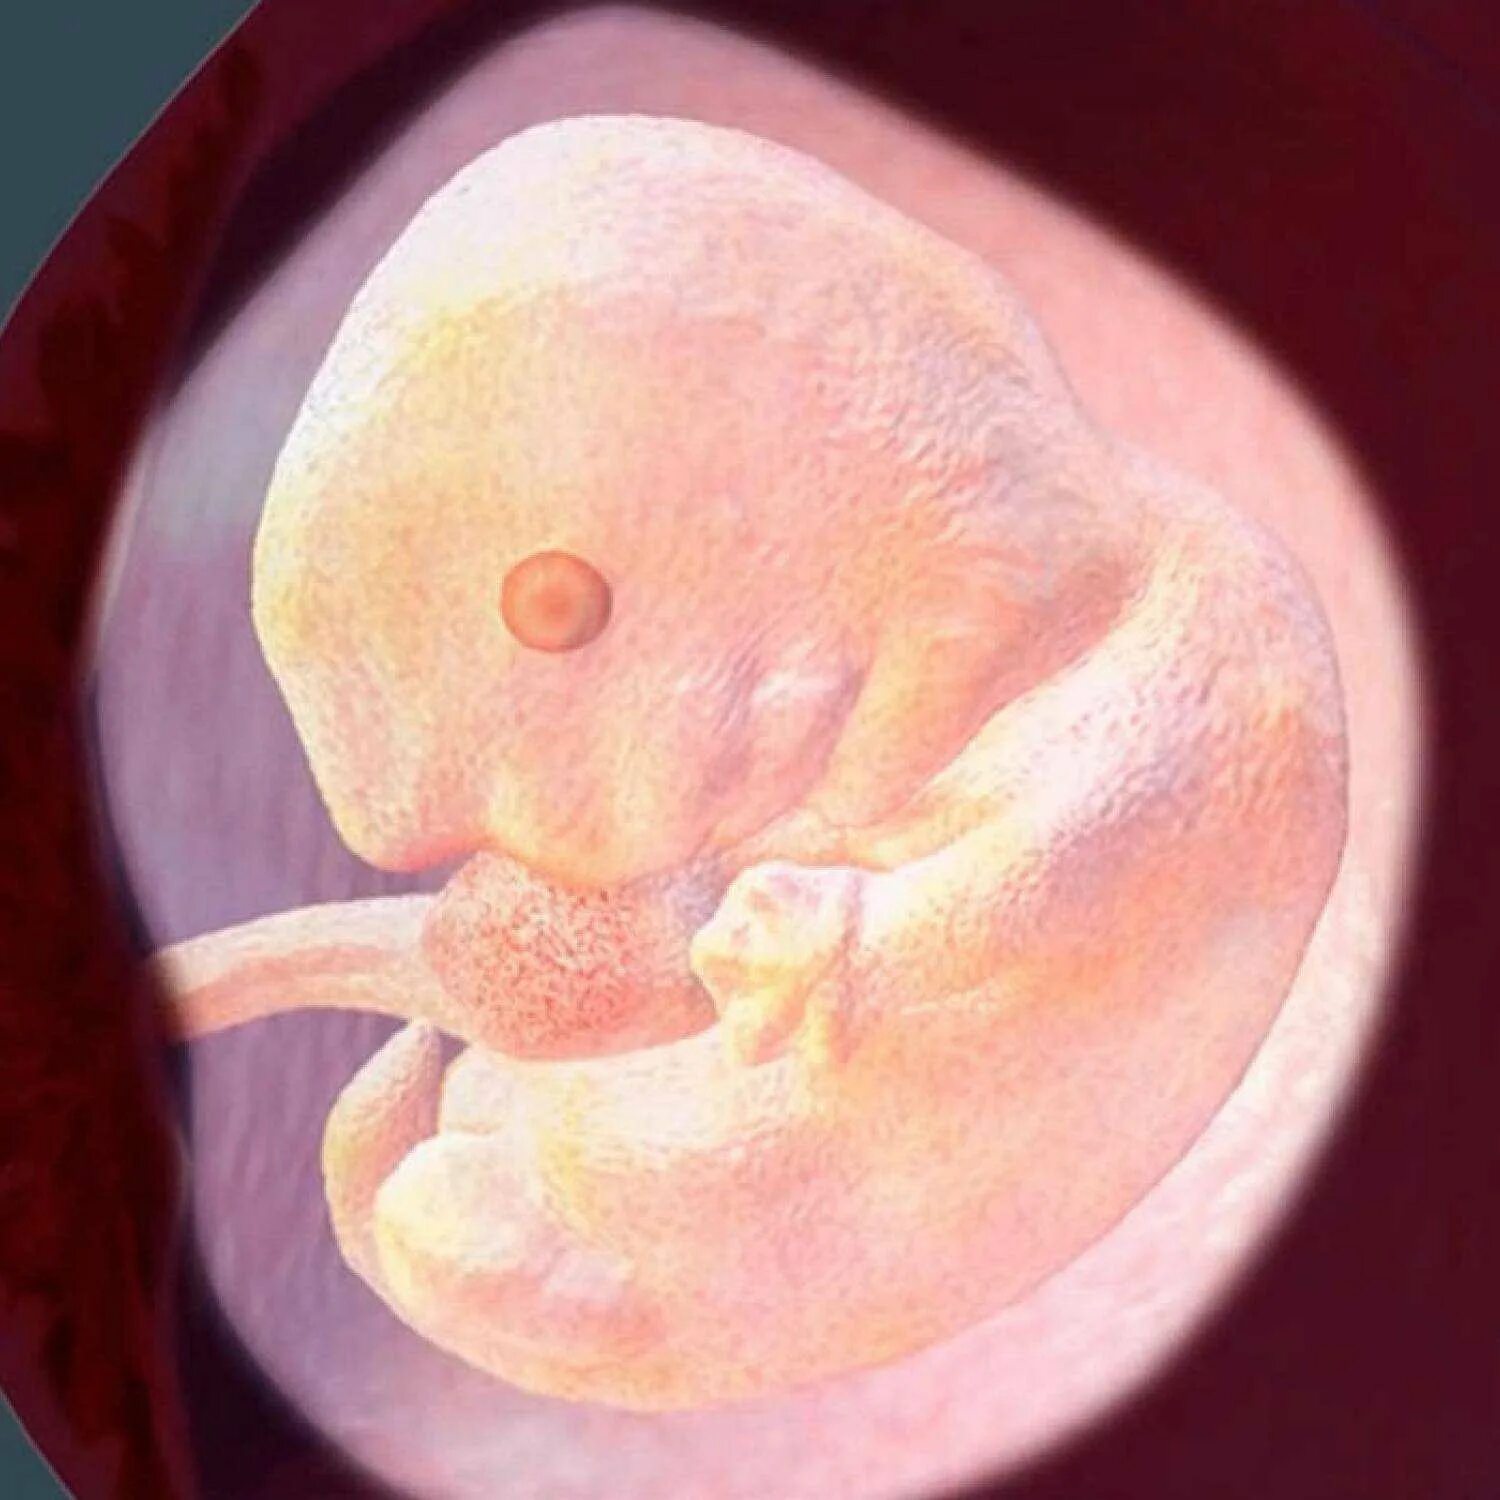 Роды на 7 неделе. Малыш на 8 акушерской неделе беременности. 8 Недель беременности фото плода. Эмбрион на 8 неделе беременности. Эмбрион на 8 неделе акушерской беременности.